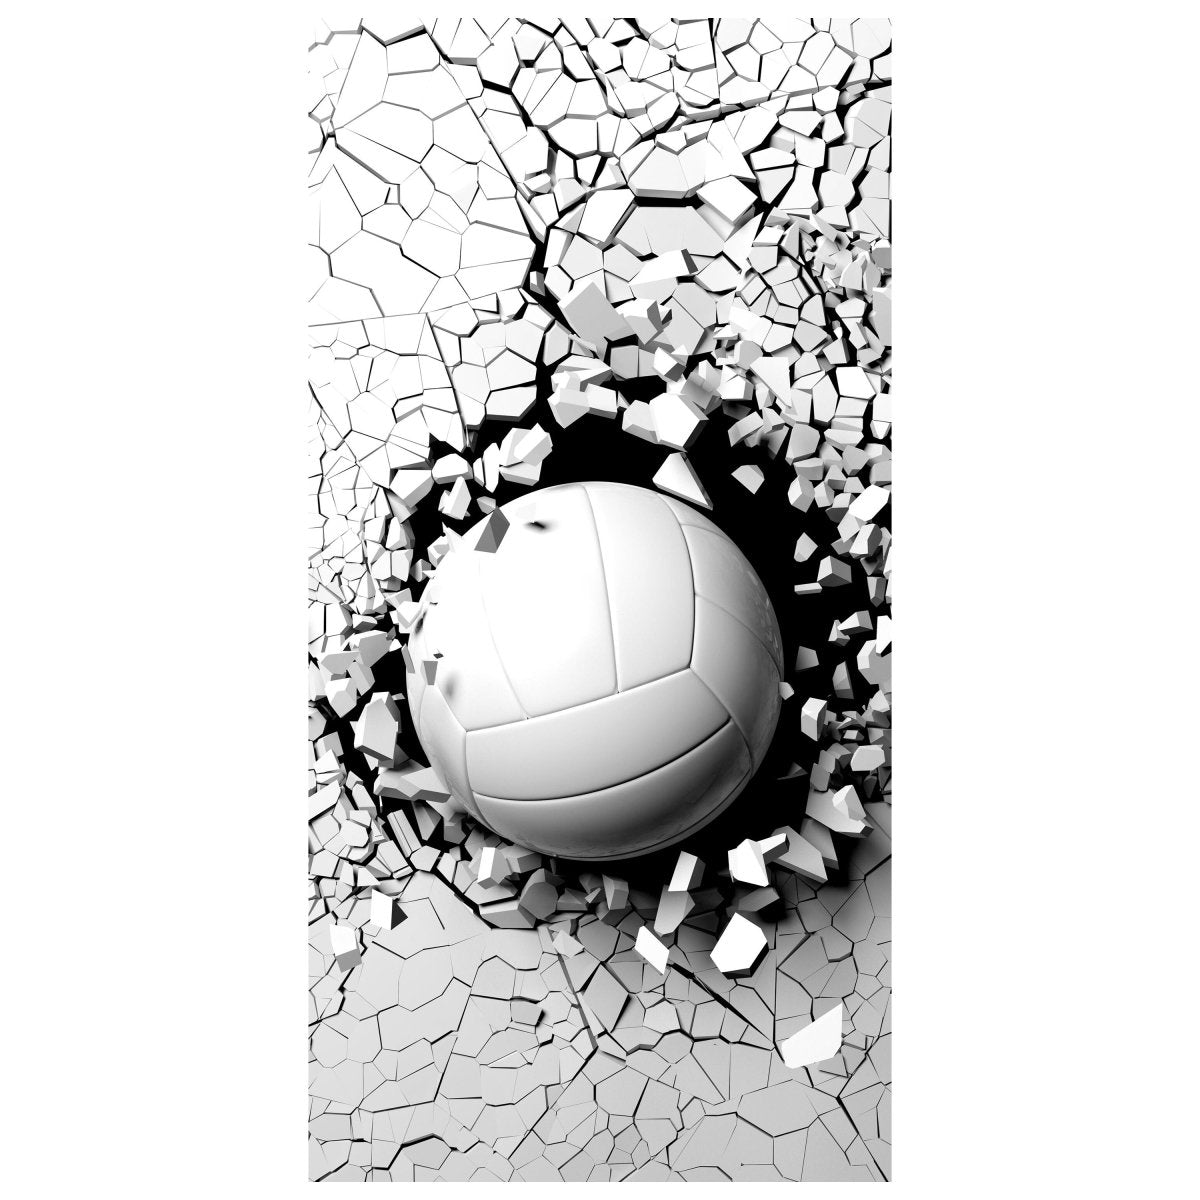 Türtapete Volleyball durch Wand, 3D Motiv, Sport M1199 - Bild 2